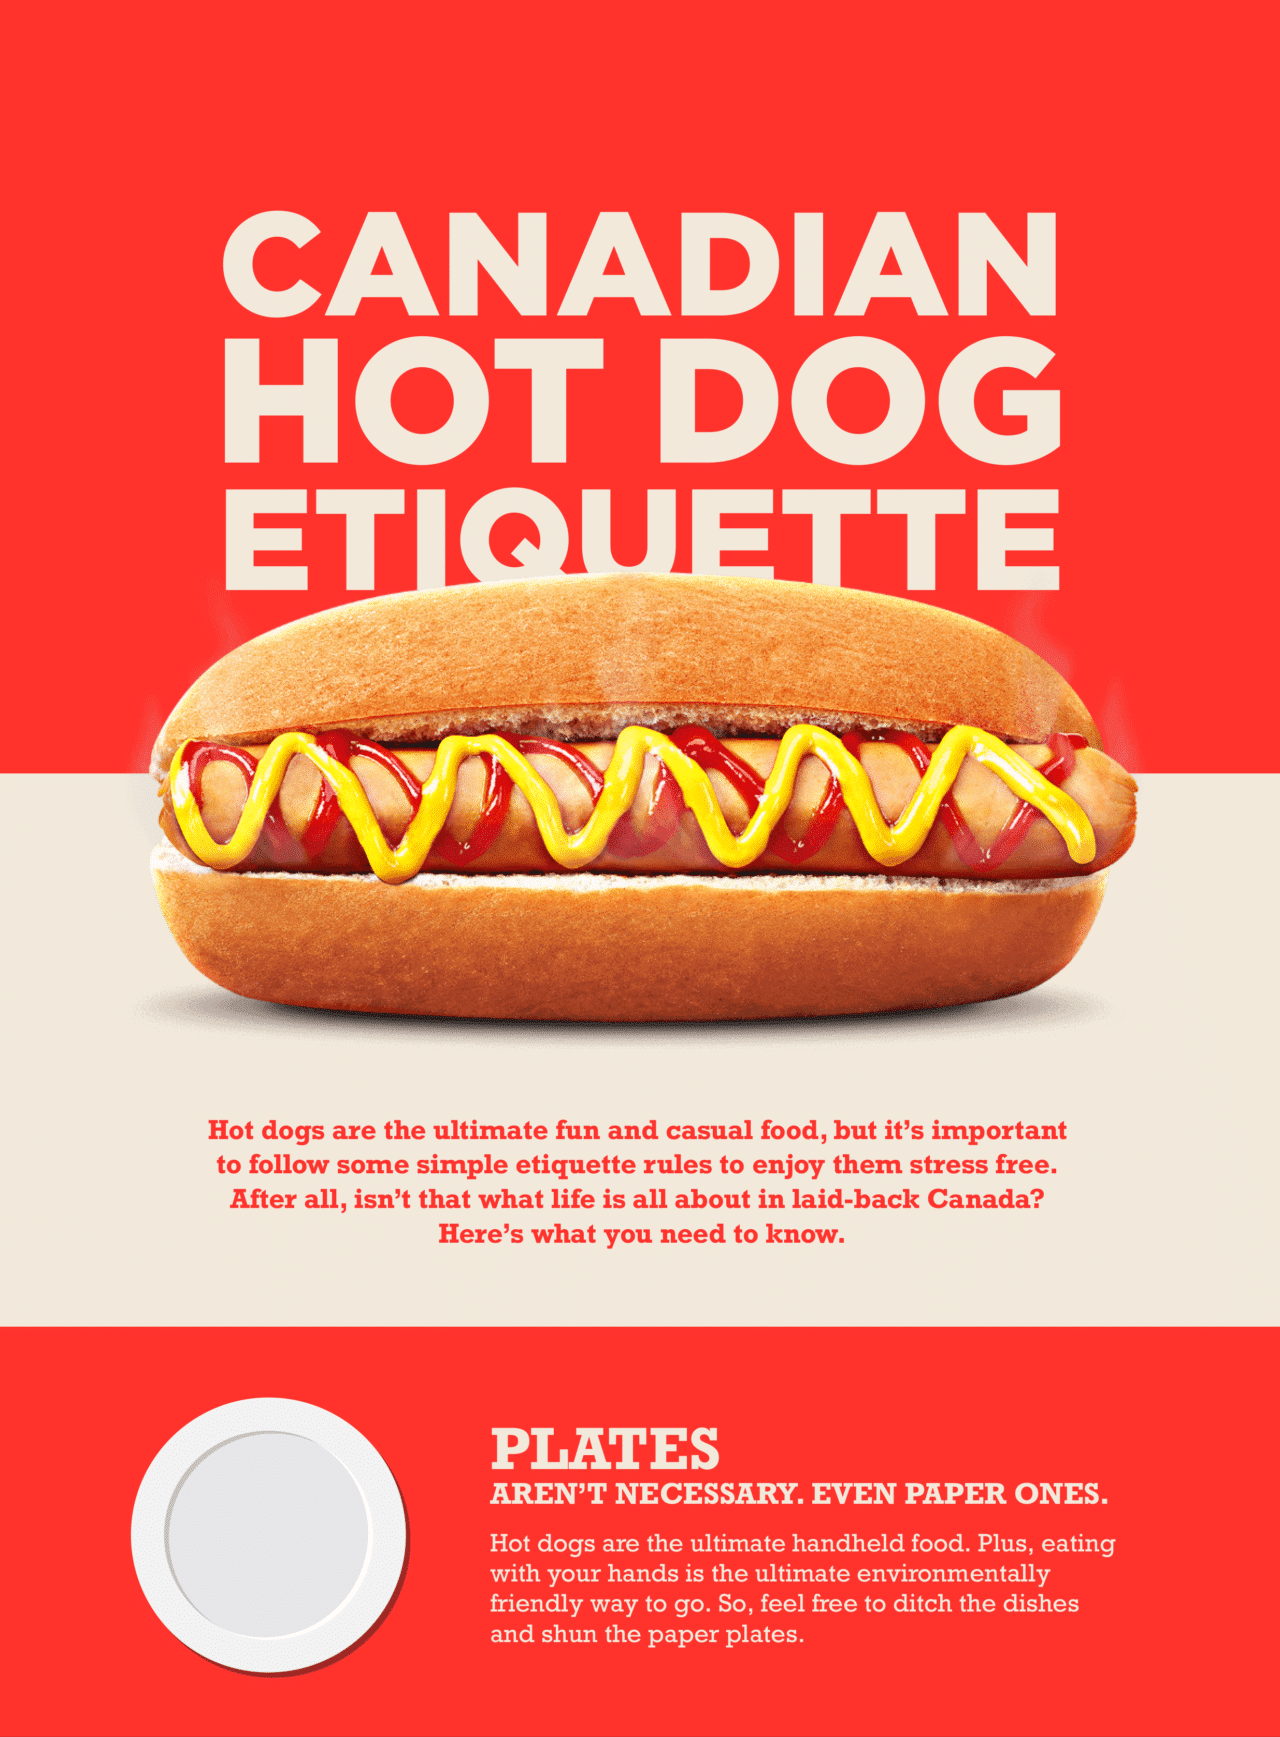 Canadian hot dog etiquette